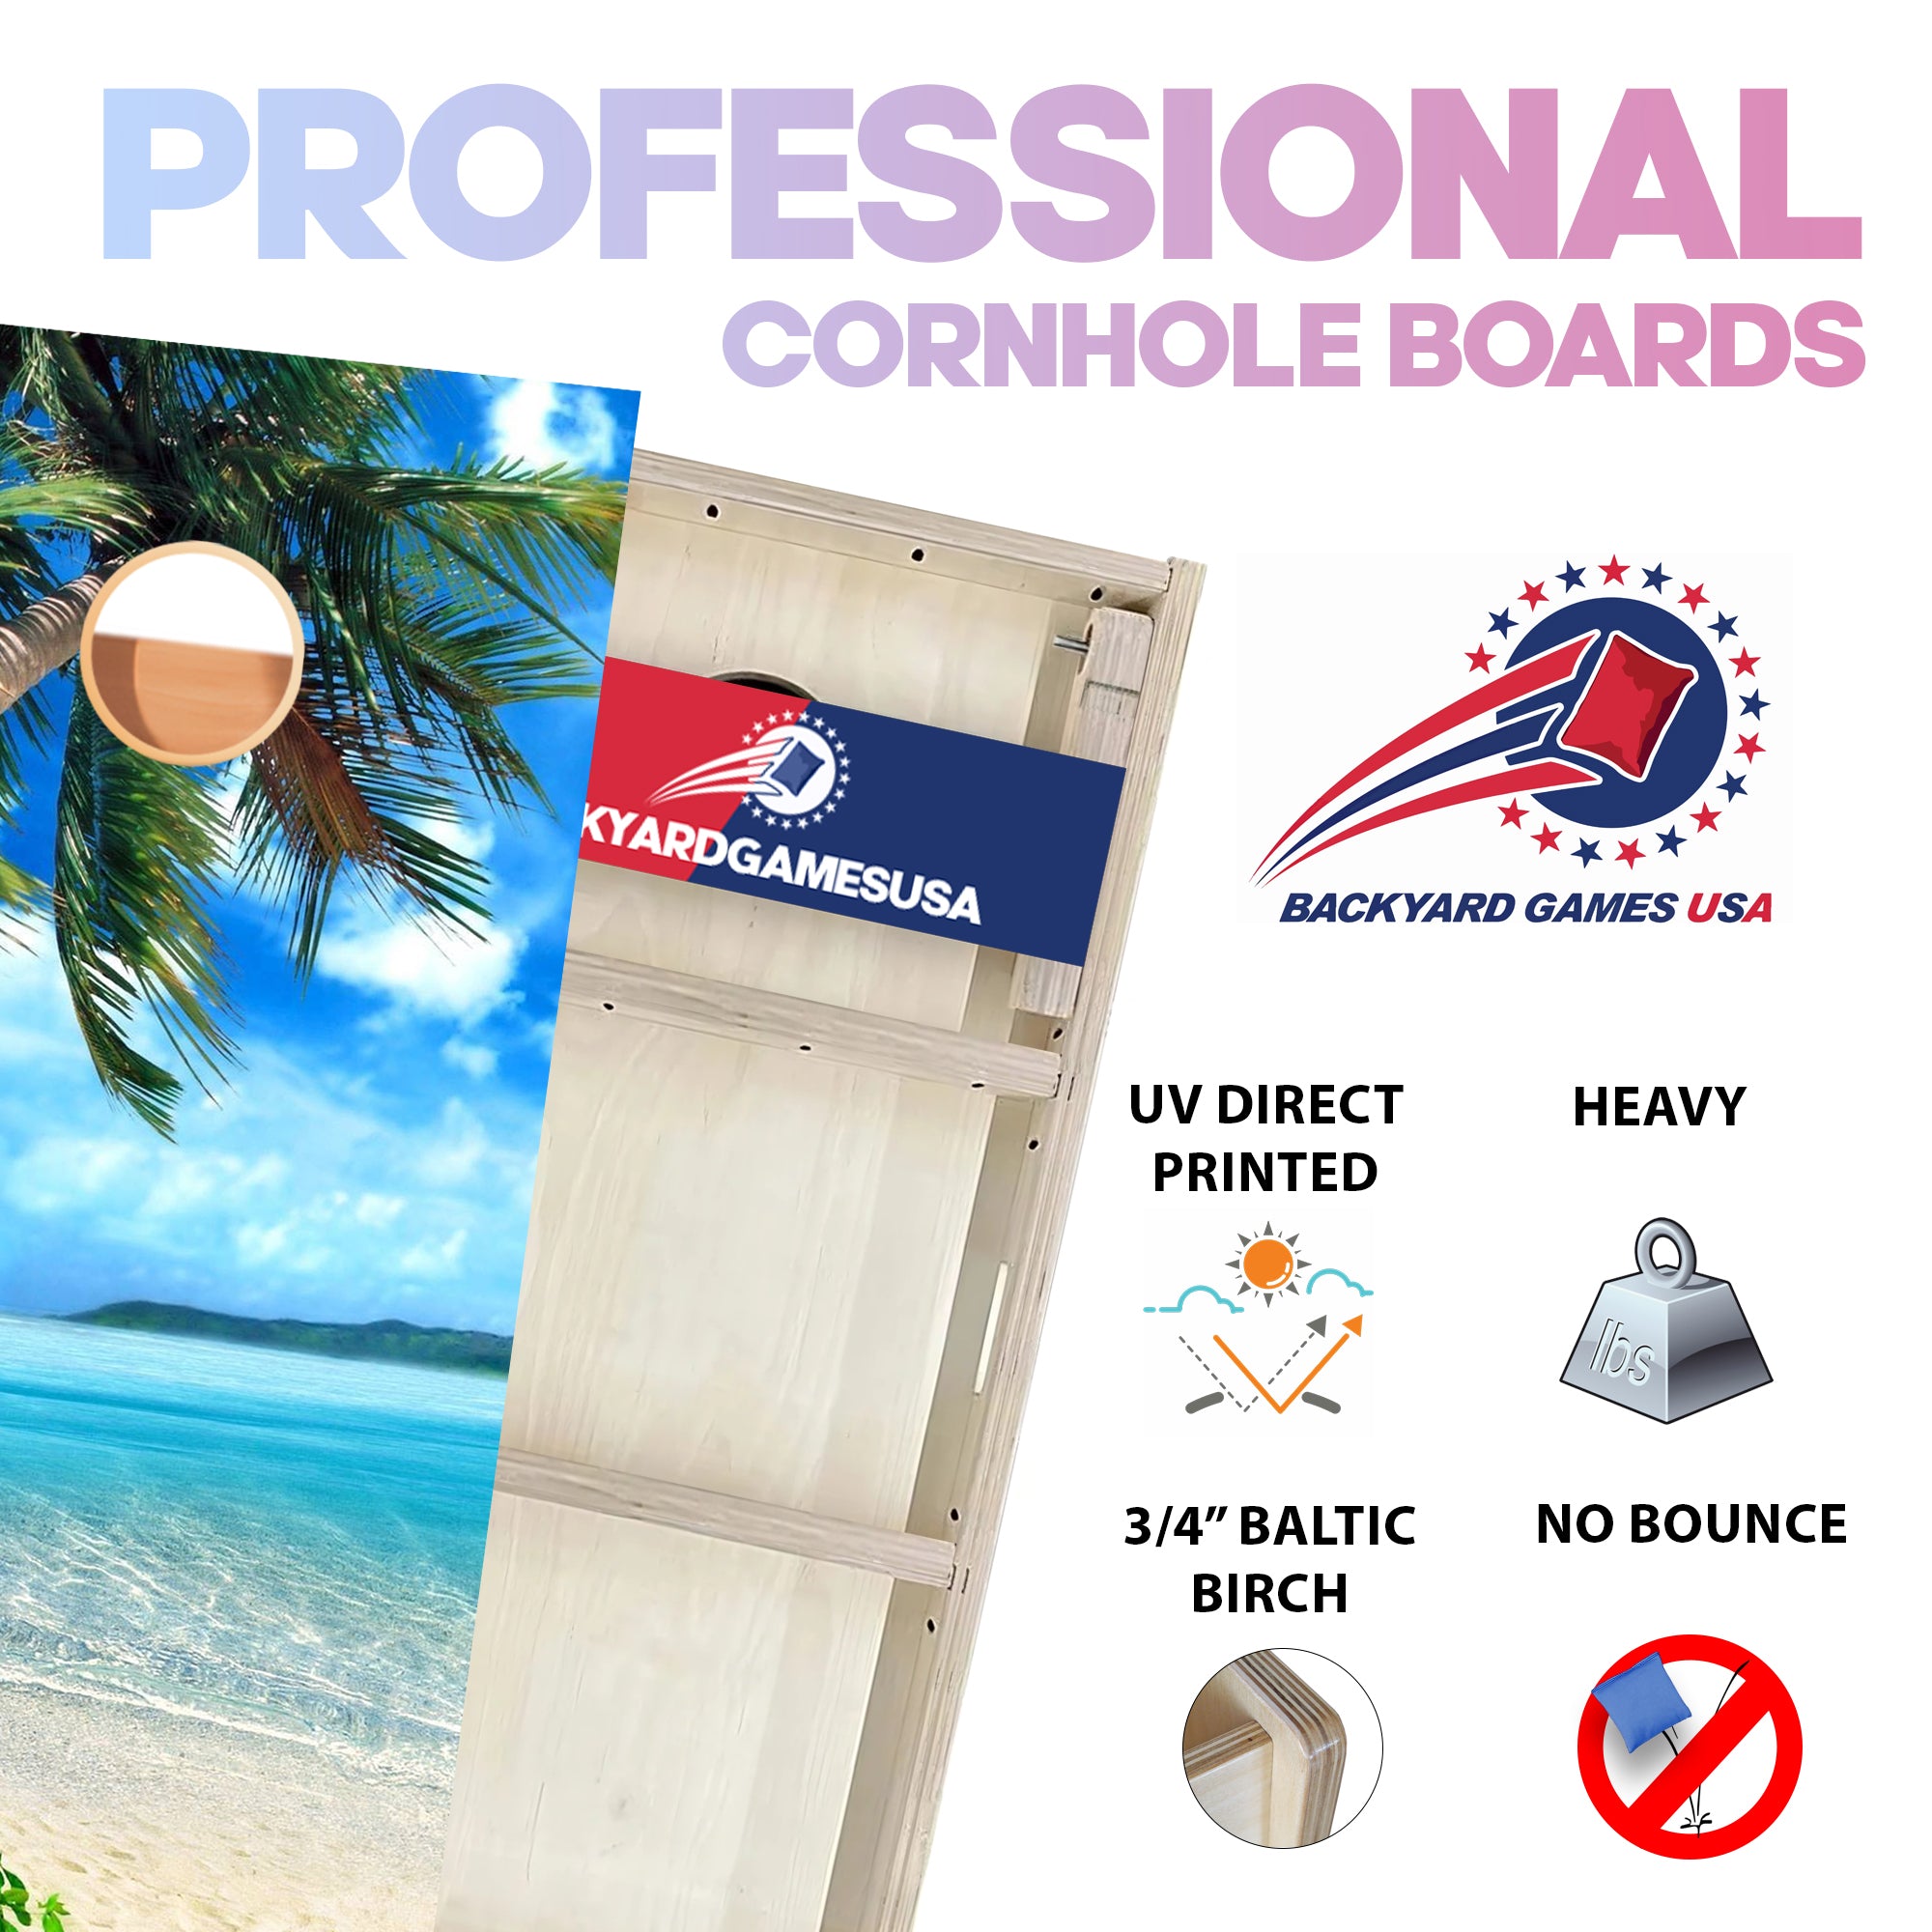 Palm Ocean Professional Cornhole Boards